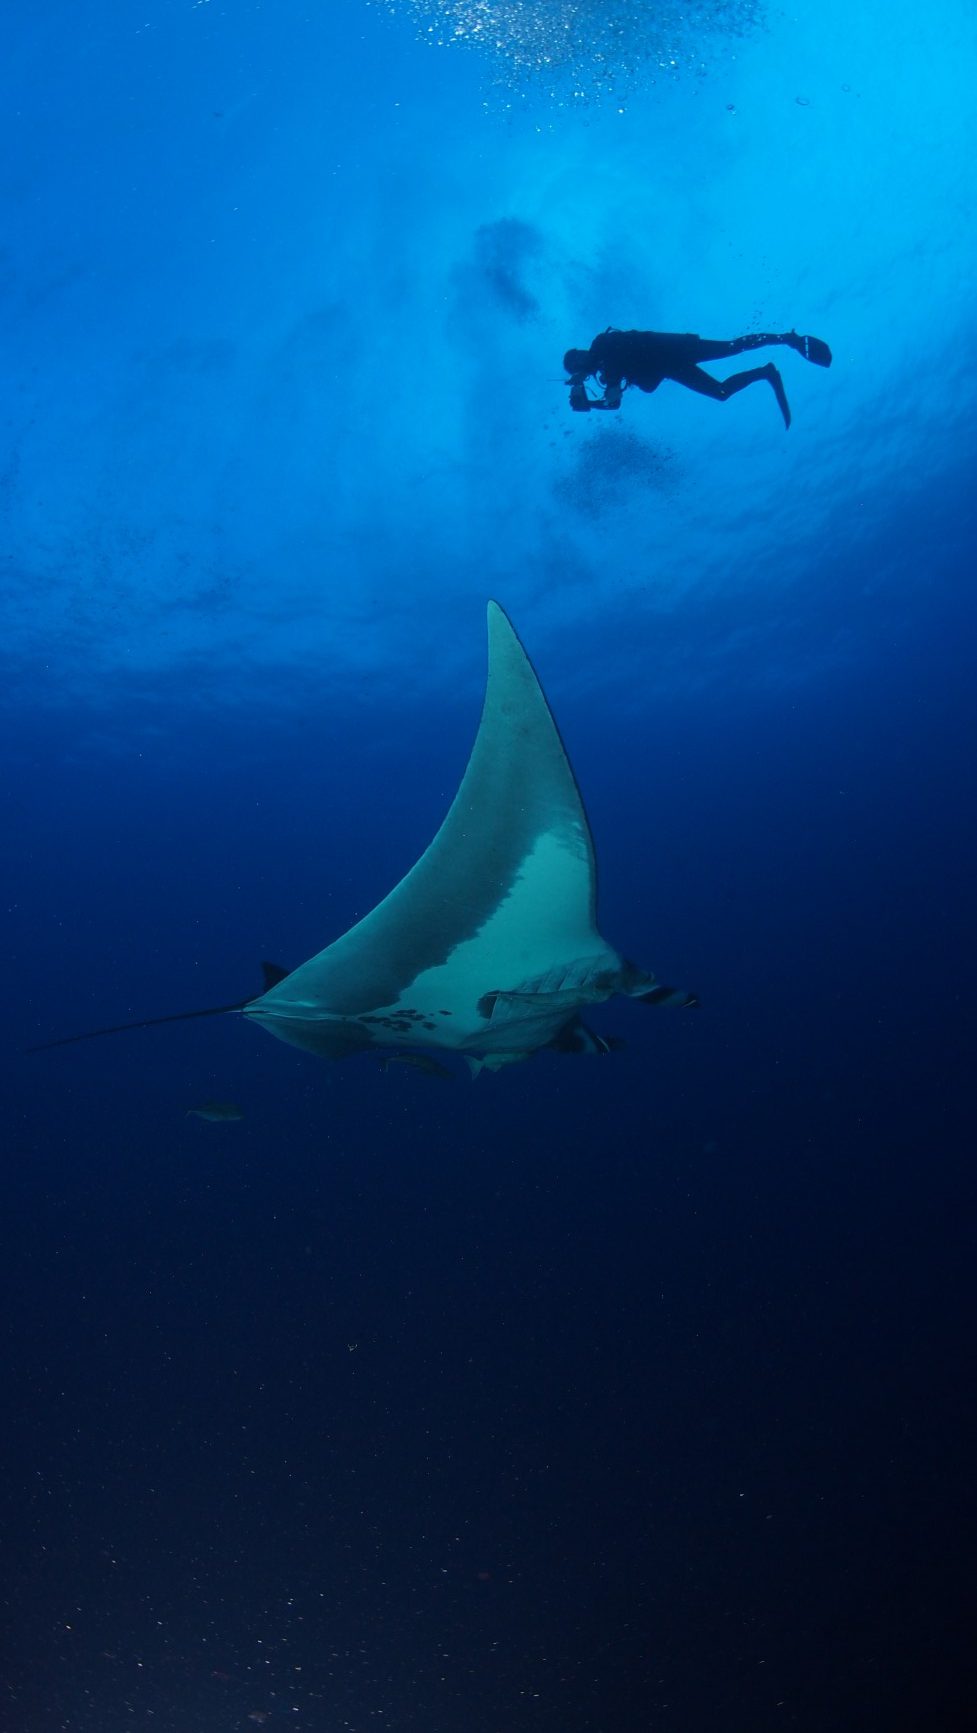 scuba diver angles camera down to watch manta ray pass